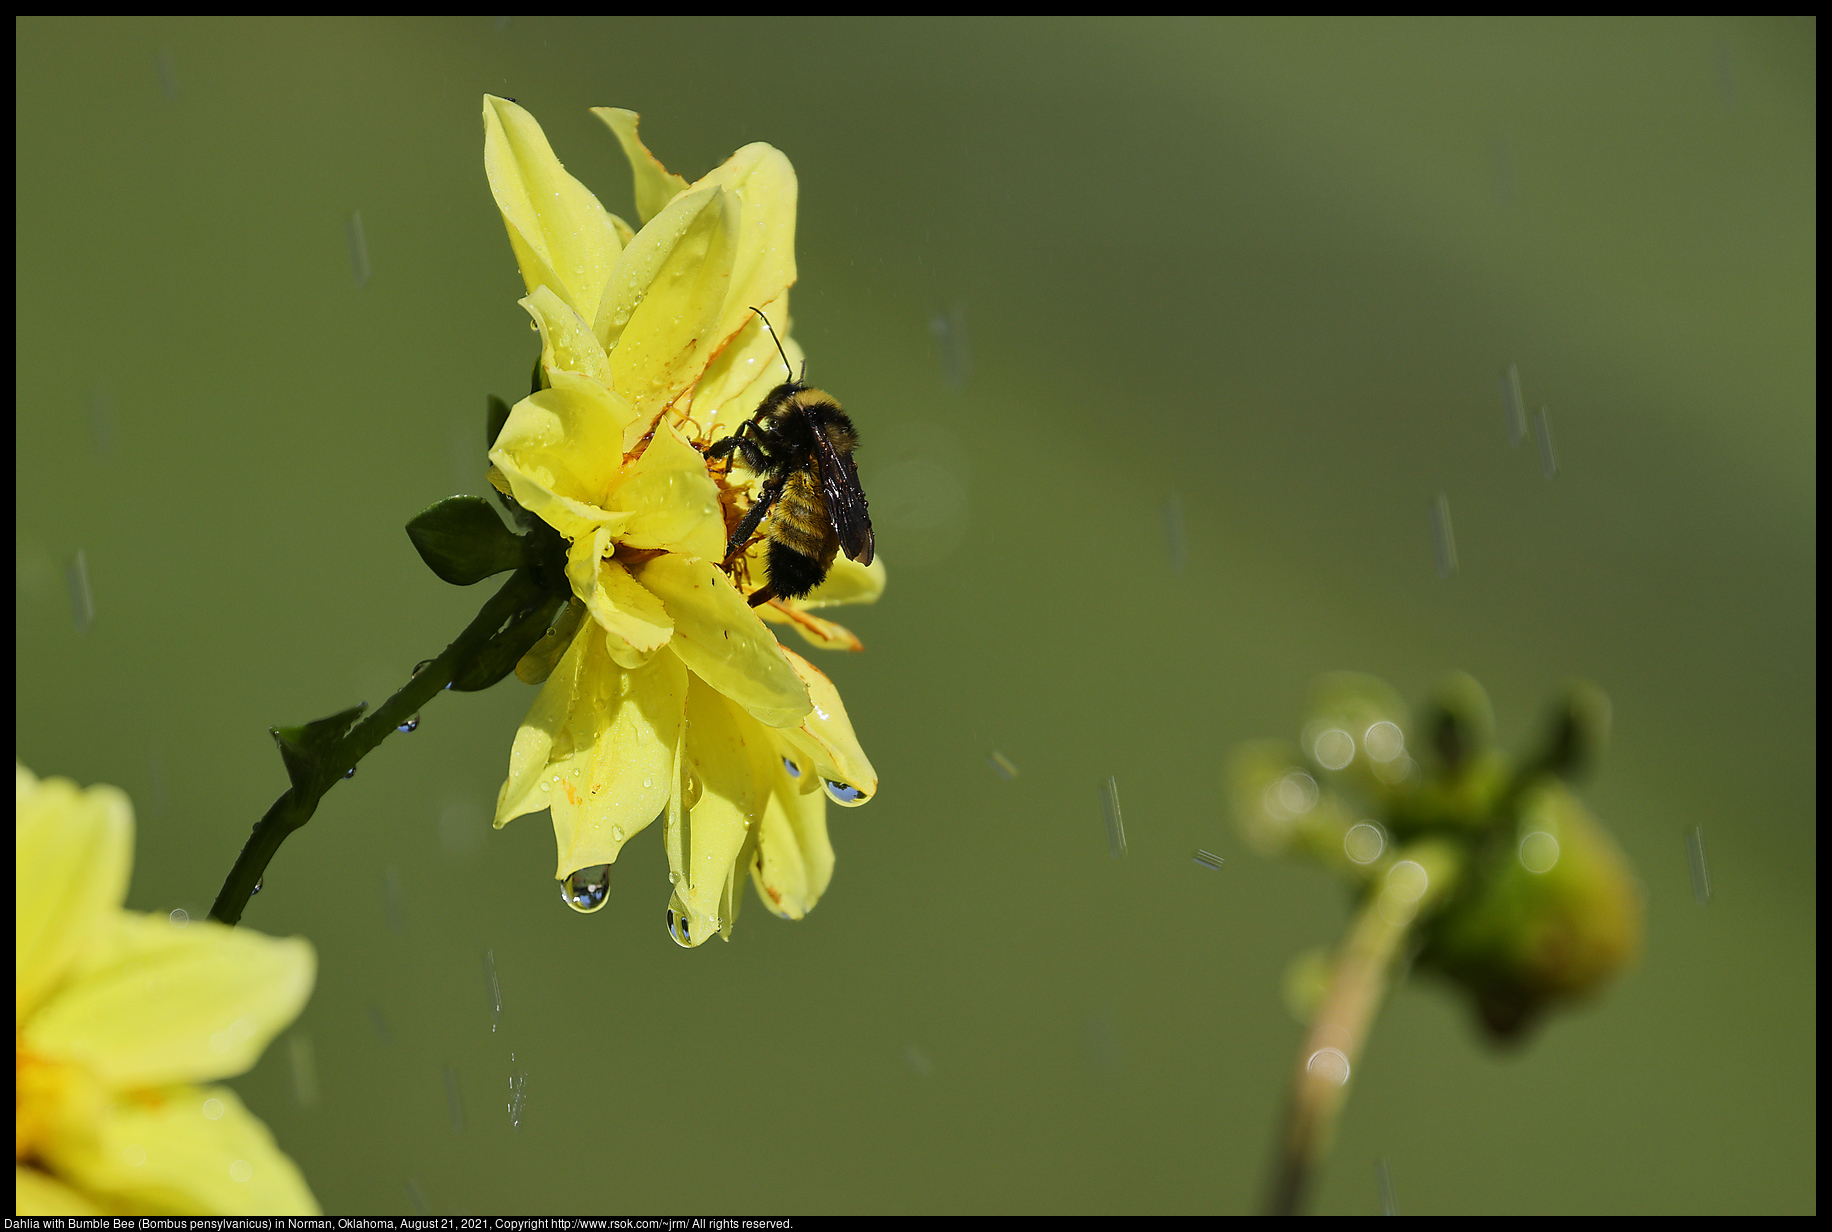 Dahlia with Bumble Bee (Bombus pensylvanicus) in Norman, Oklahoma, August 21, 2021